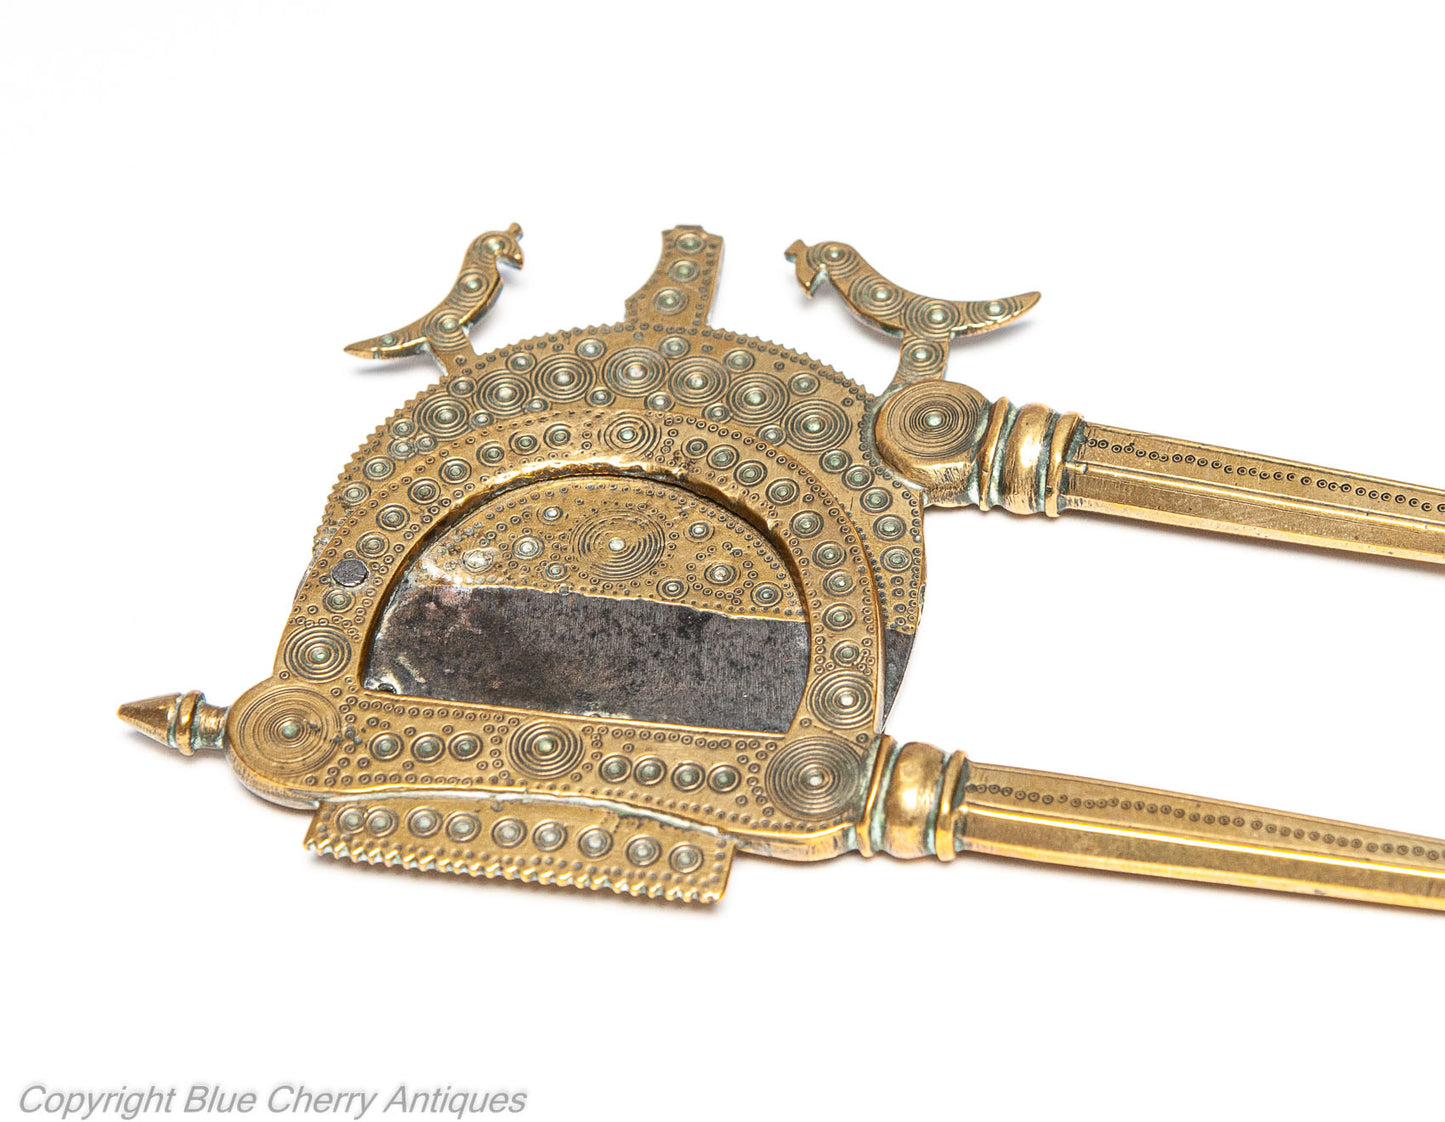 Rare Antique Indian Brass Betel Nut Cutter with Bird Decoration - Deccan Region (Code 1858)